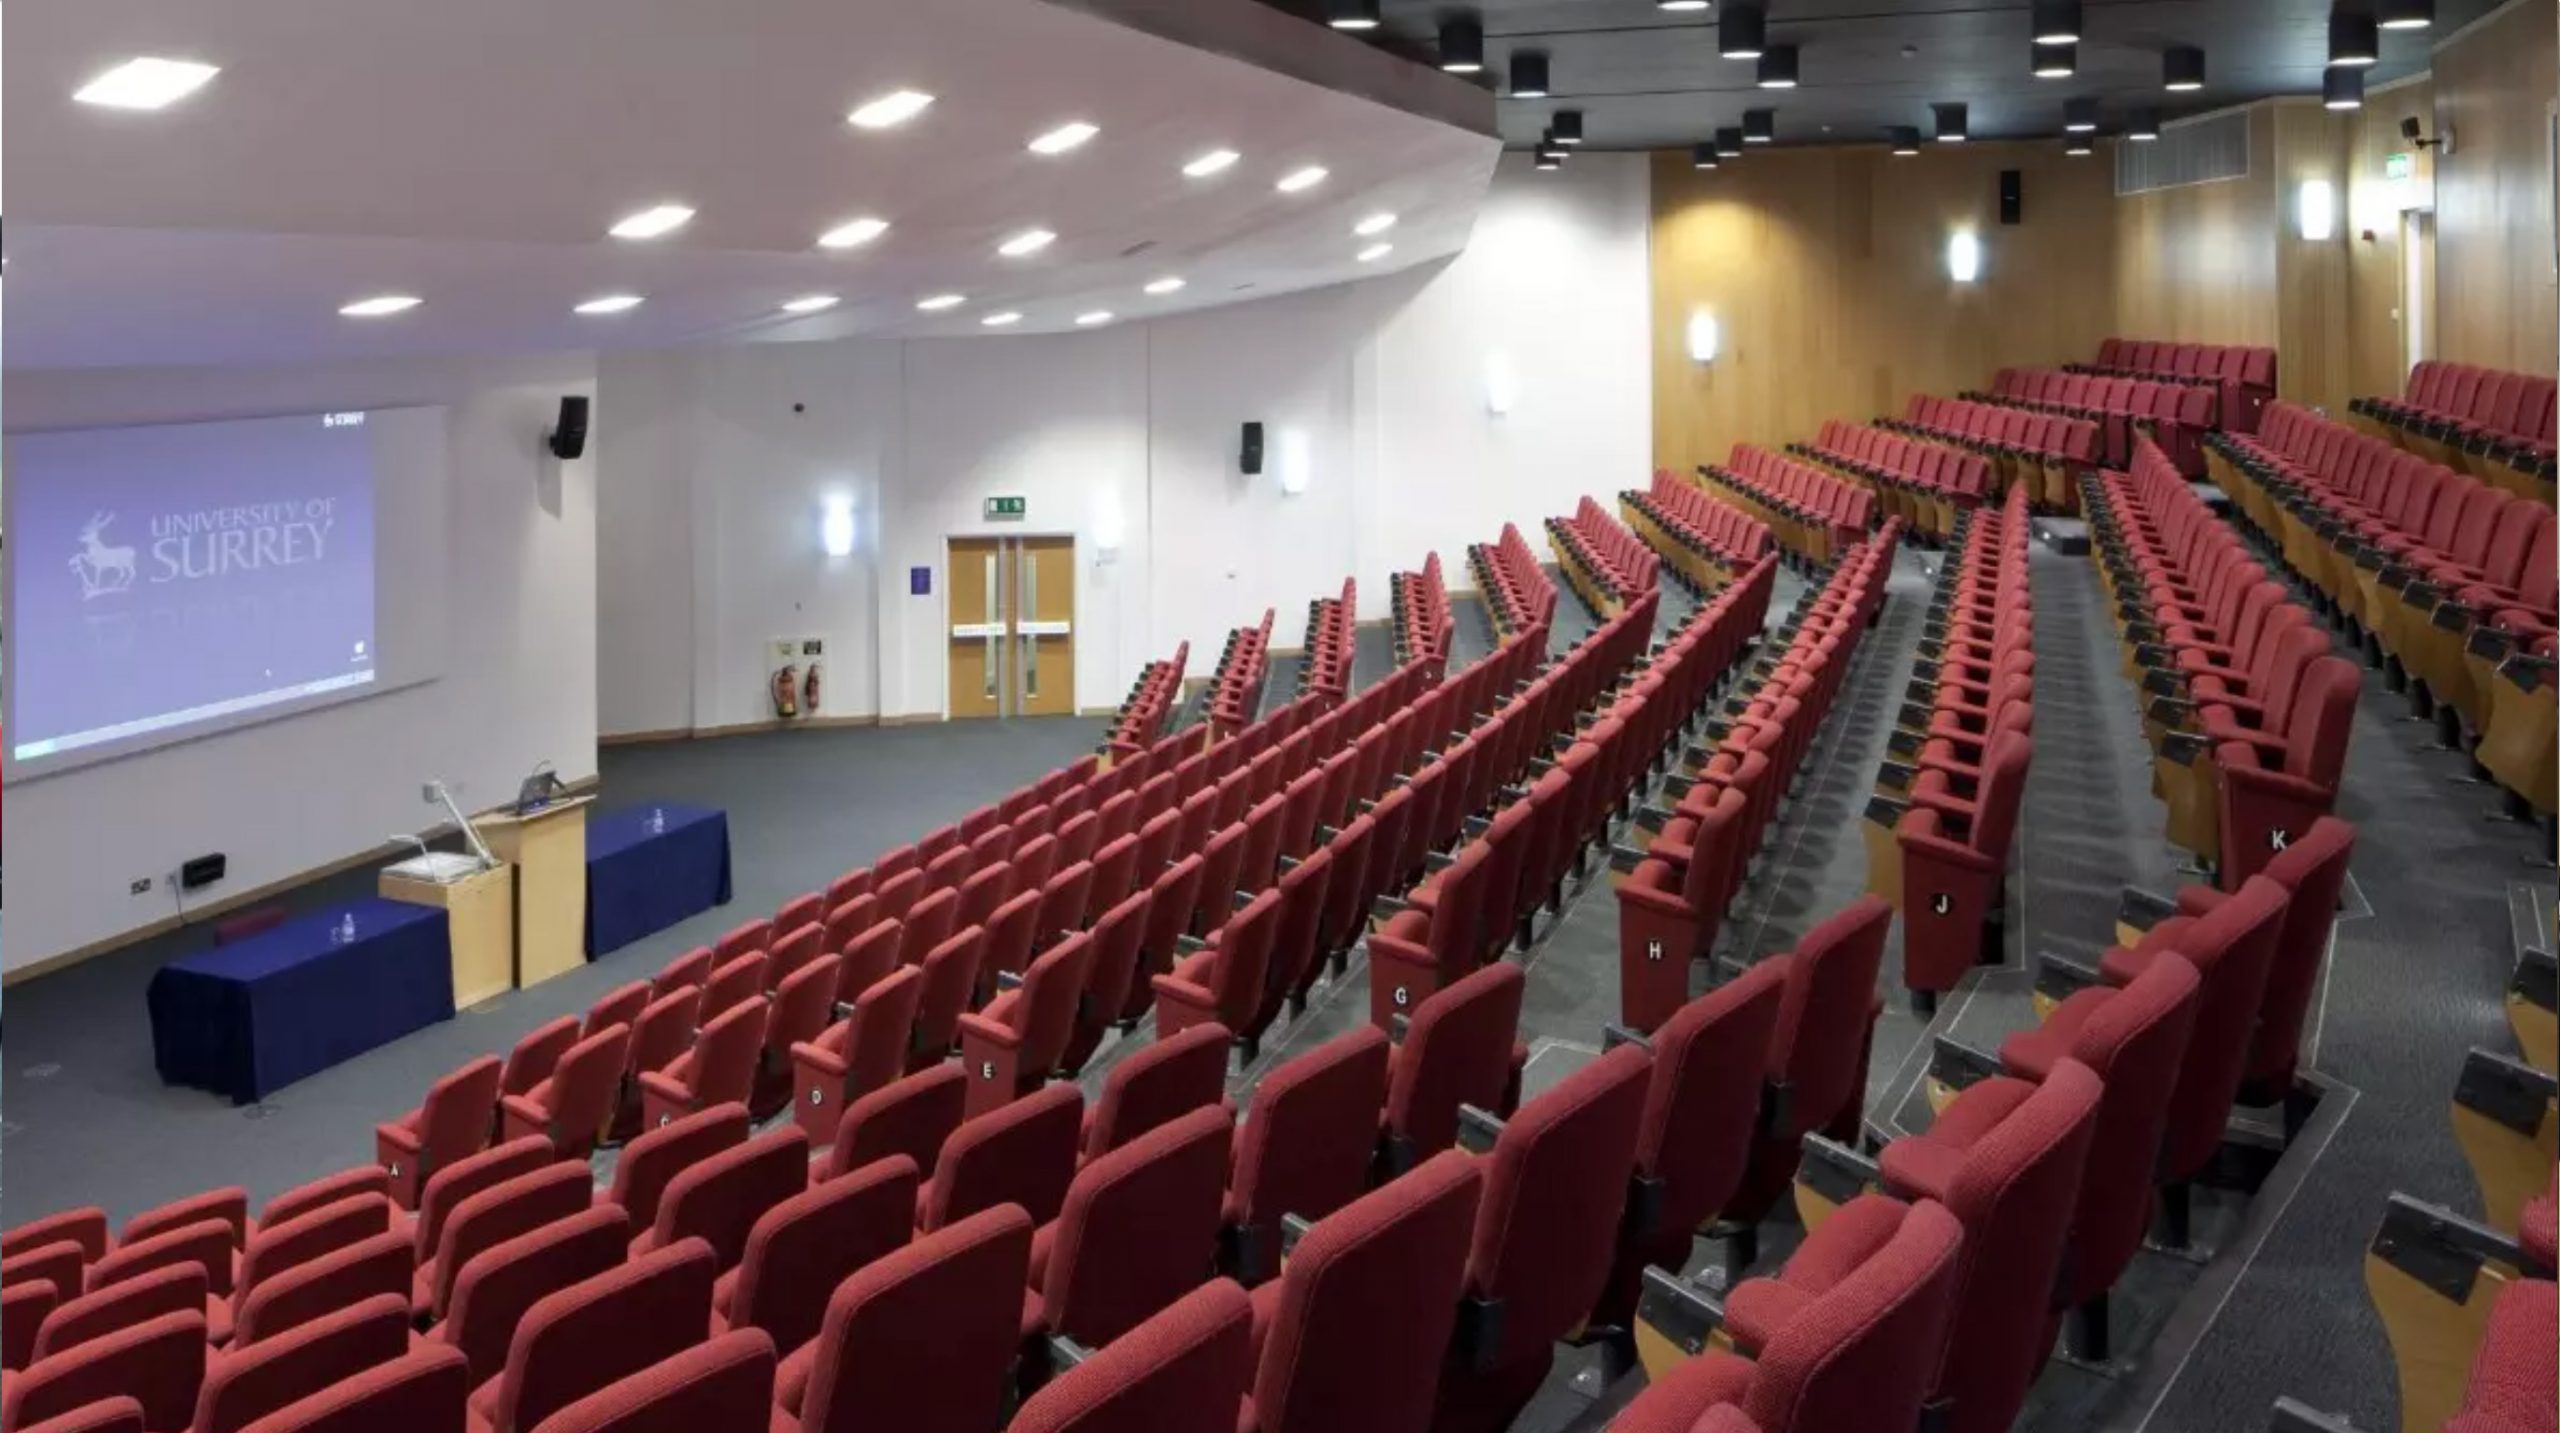 University of Surrey lecture theatres